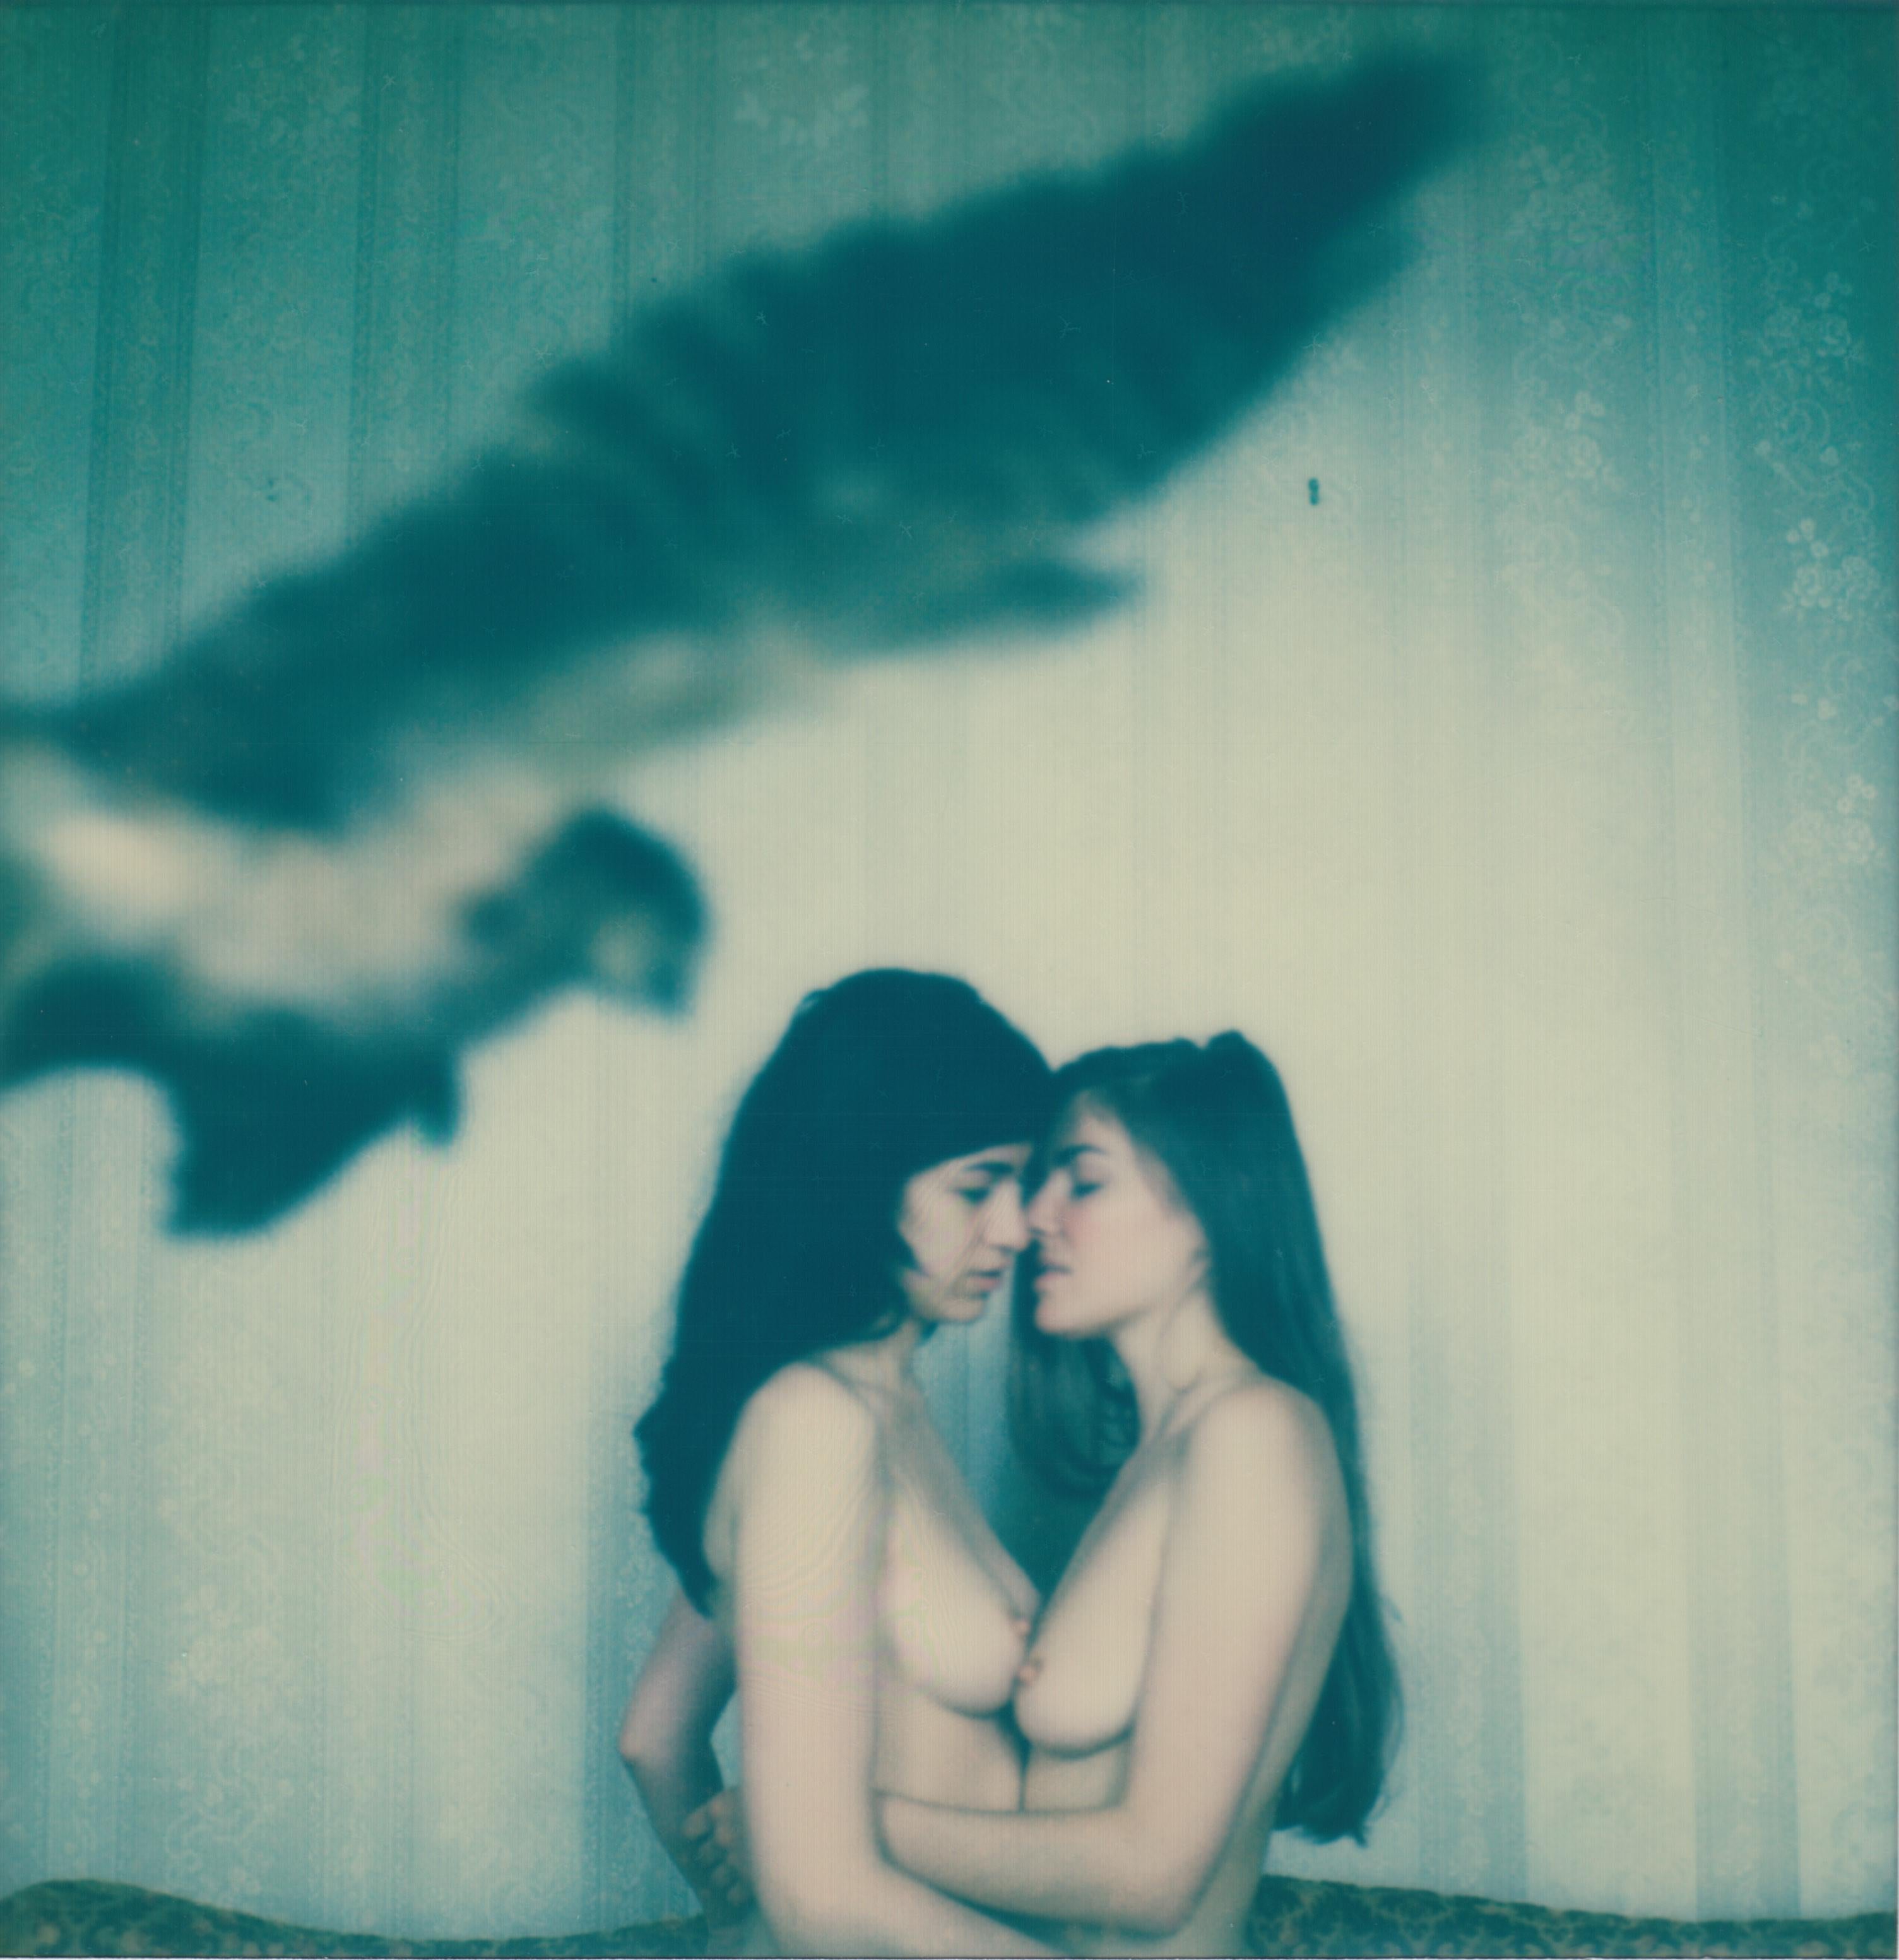 Sven van Driessche Color Photograph - The Intruder - 21st Century, Contemporary, Color, Polaroid, Love, Nude